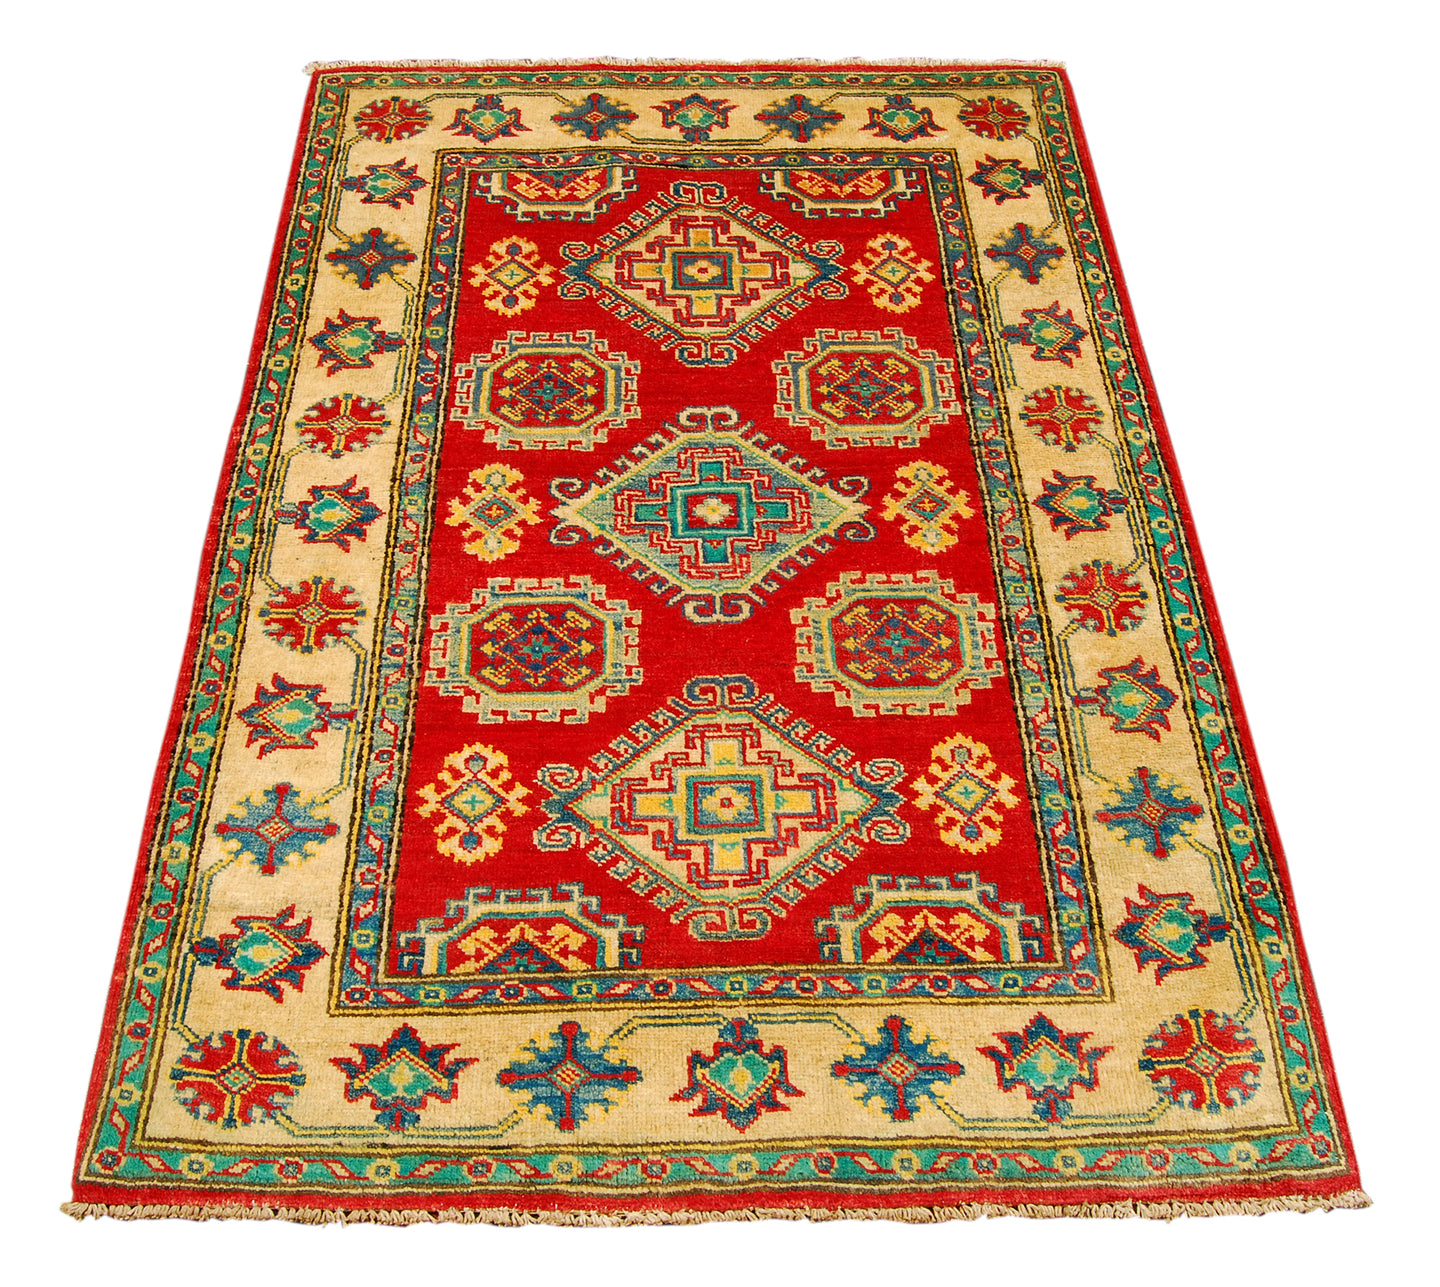 Rectangular Hand knotted carpet Ghazni Chubi Red Colors 146x100CM